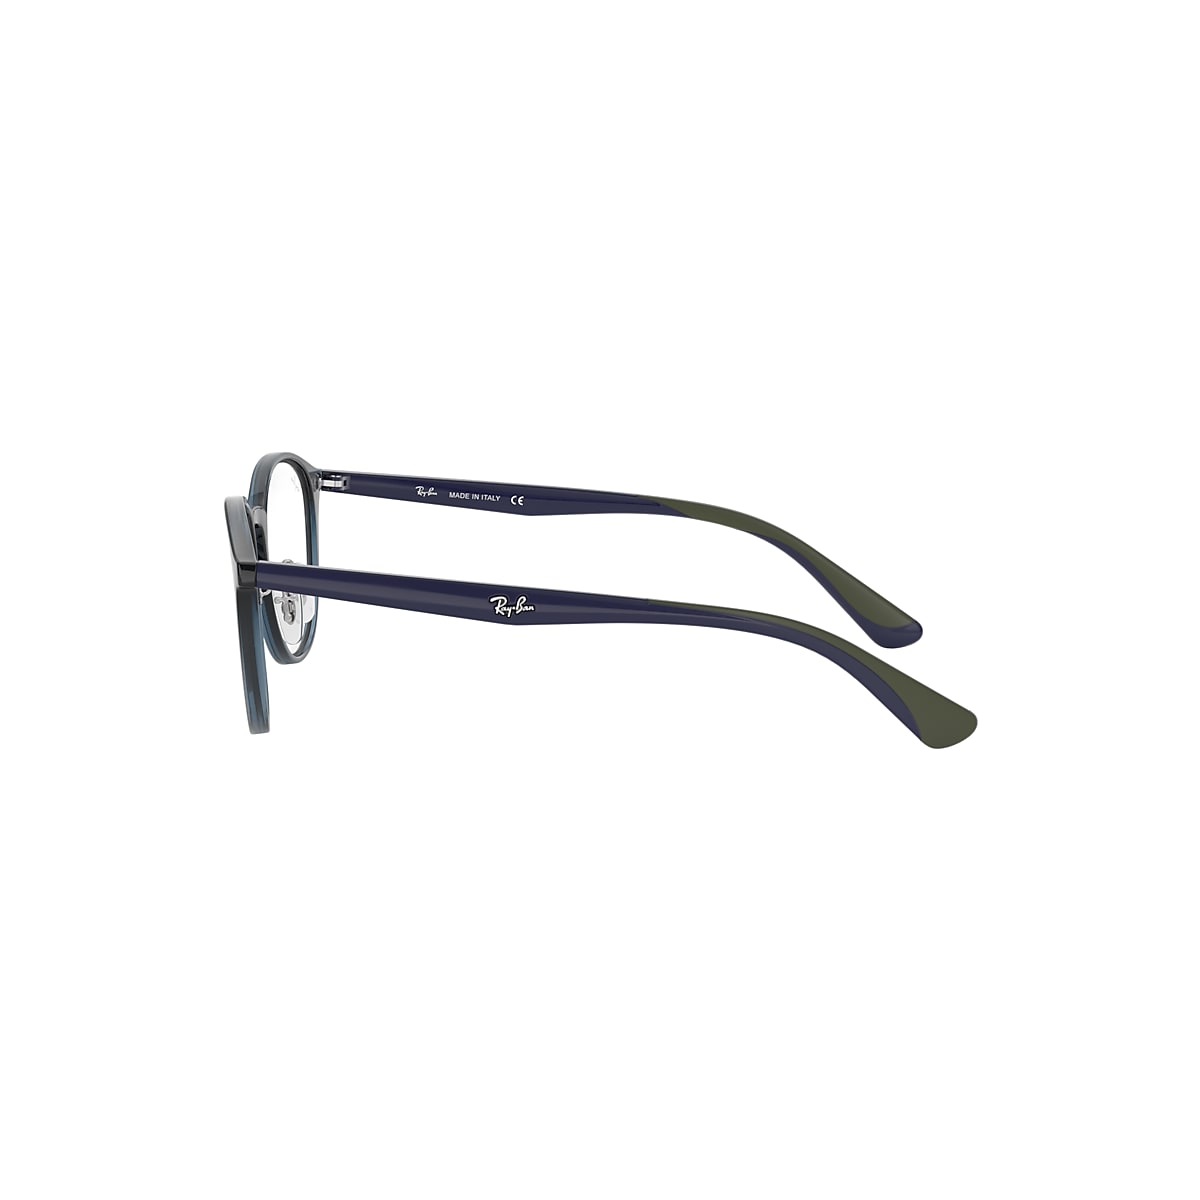 RB7156 OPTICS Eyeglasses with Transparent Dark Blue Frame - RB7156 